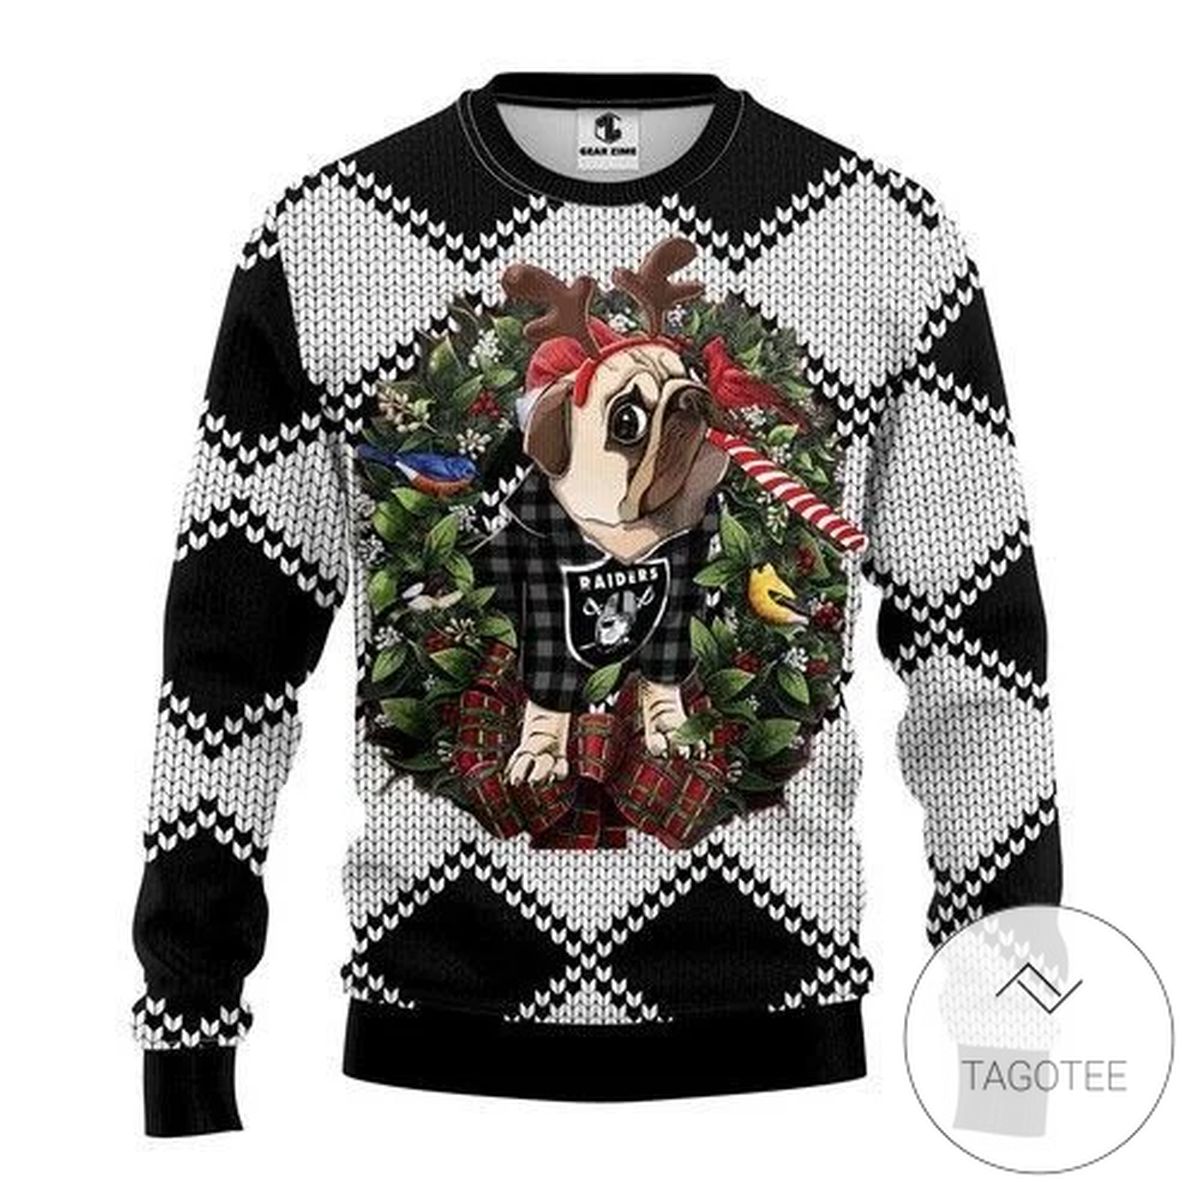 Nfl Oakland Raiders Pug Dog Sweatshirt Knitted Ugly Christmas Sweater